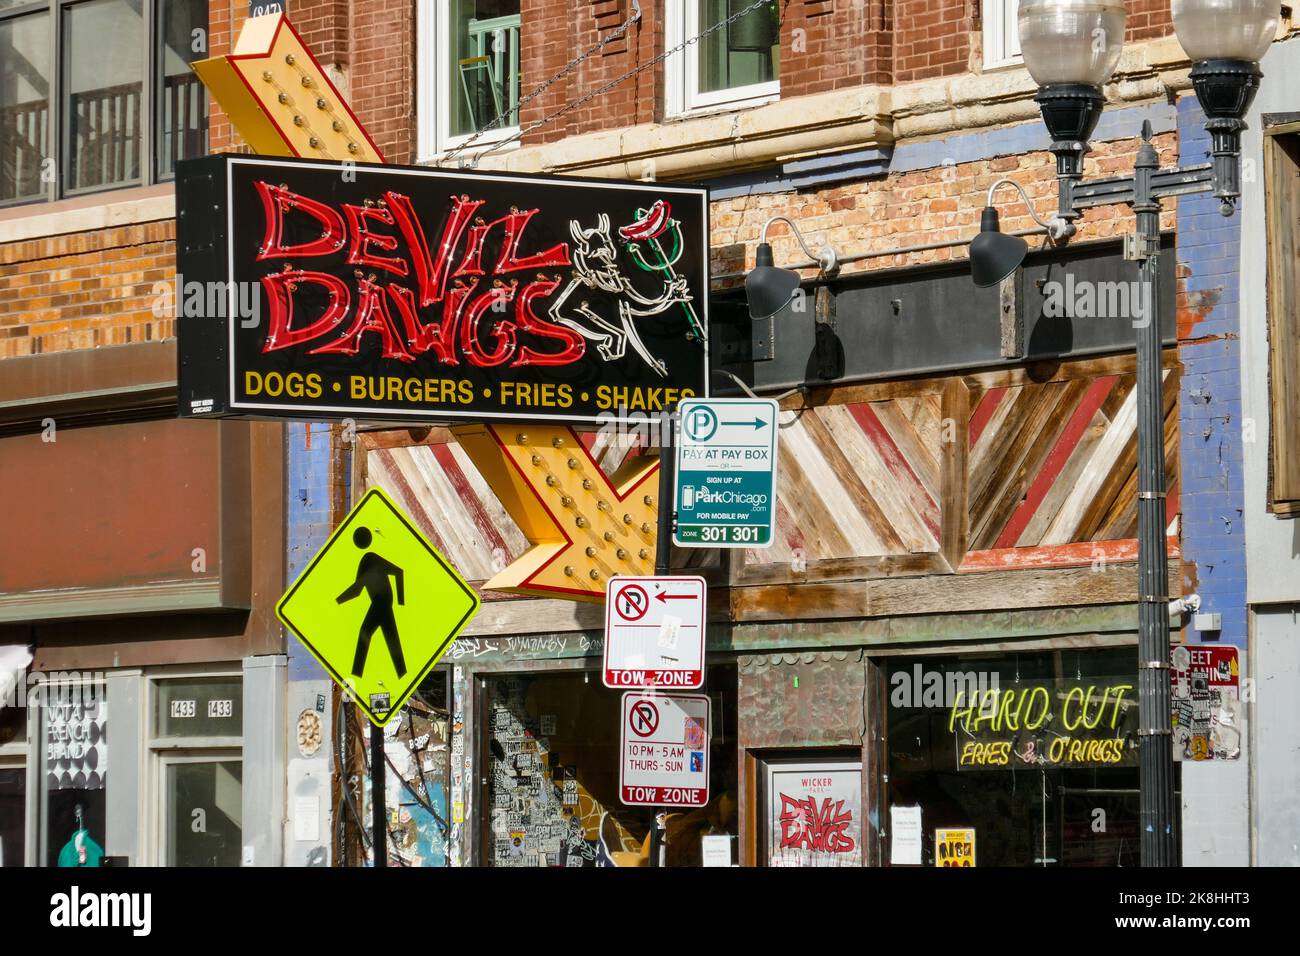 Devil Dawgs restaurant, Milwaukee Avenue Wicker Park neighborhood, Chicago, Illinois. Stock Photo